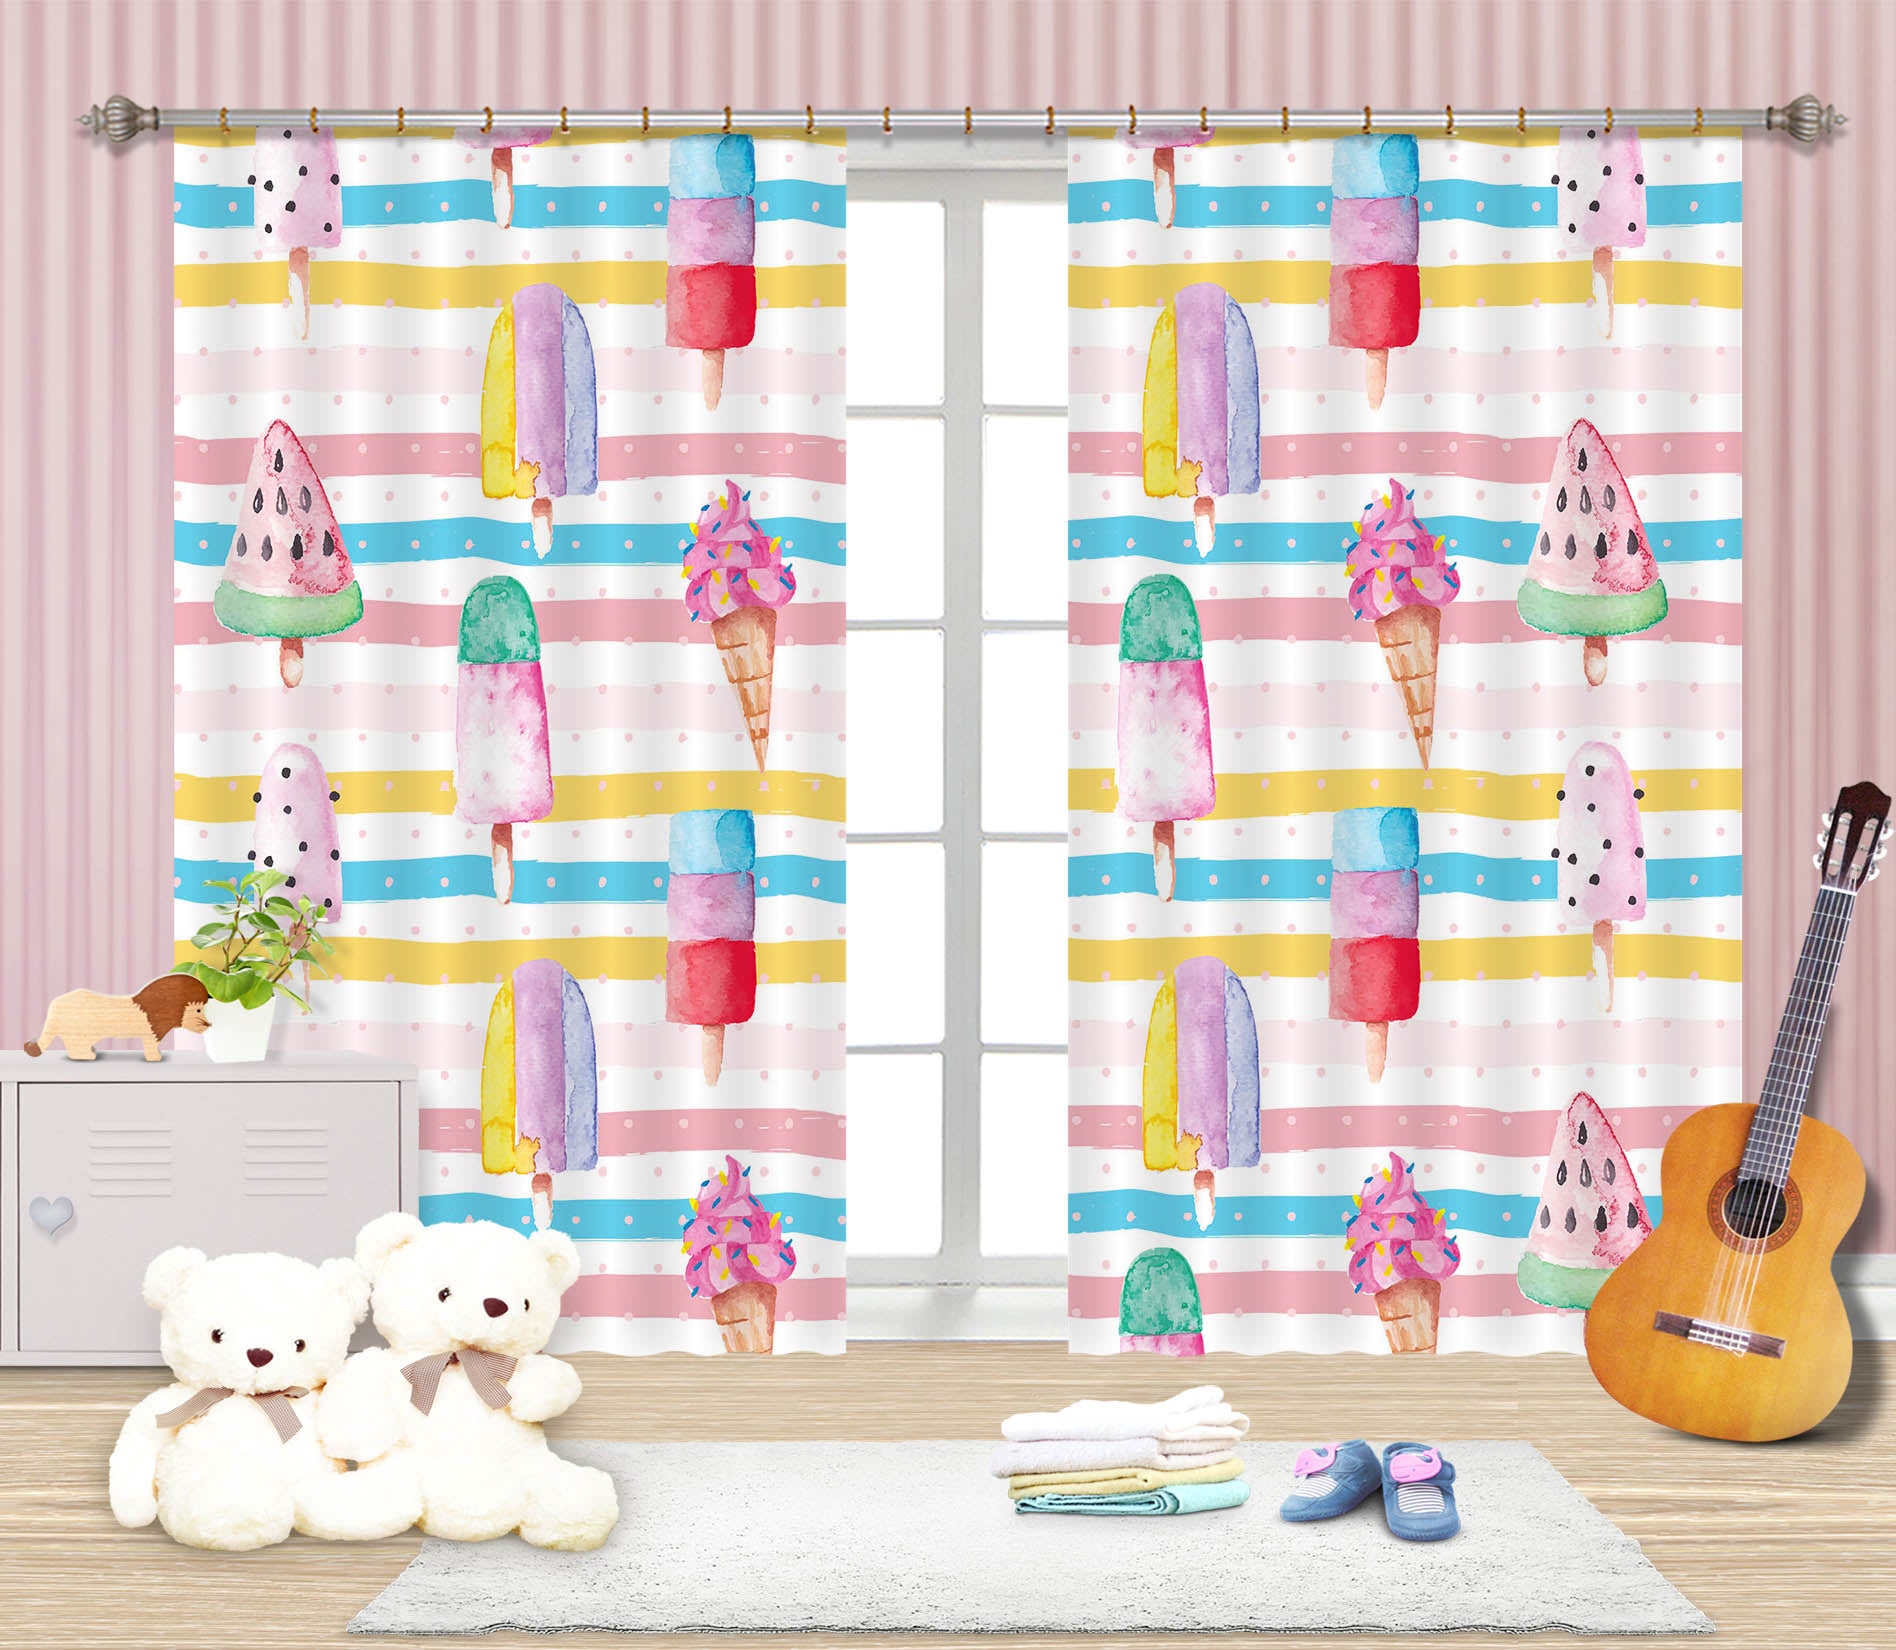 3D Color Ice Cream 240 Uta Naumann Curtain Curtains Drapes